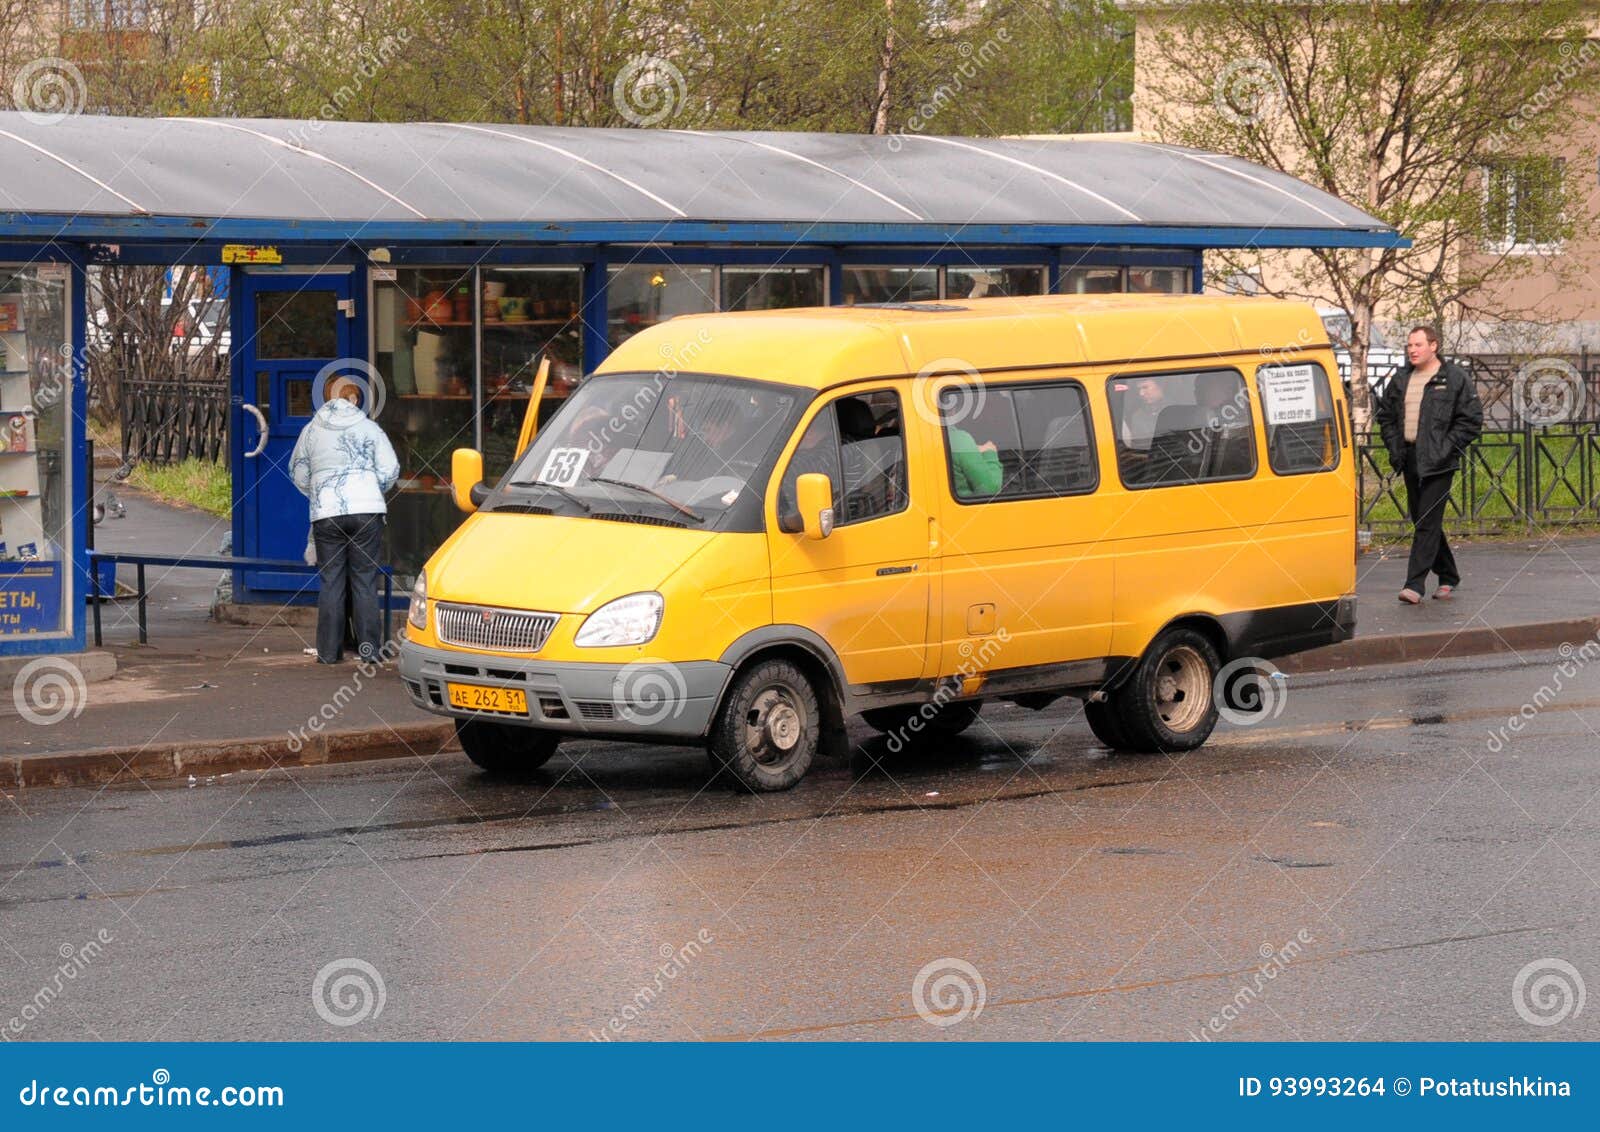 Маршрутные такси 24. Микроавтобус желтый. Желтая маршрутка. Маршрутное такси. Оранжевая маршрутка.